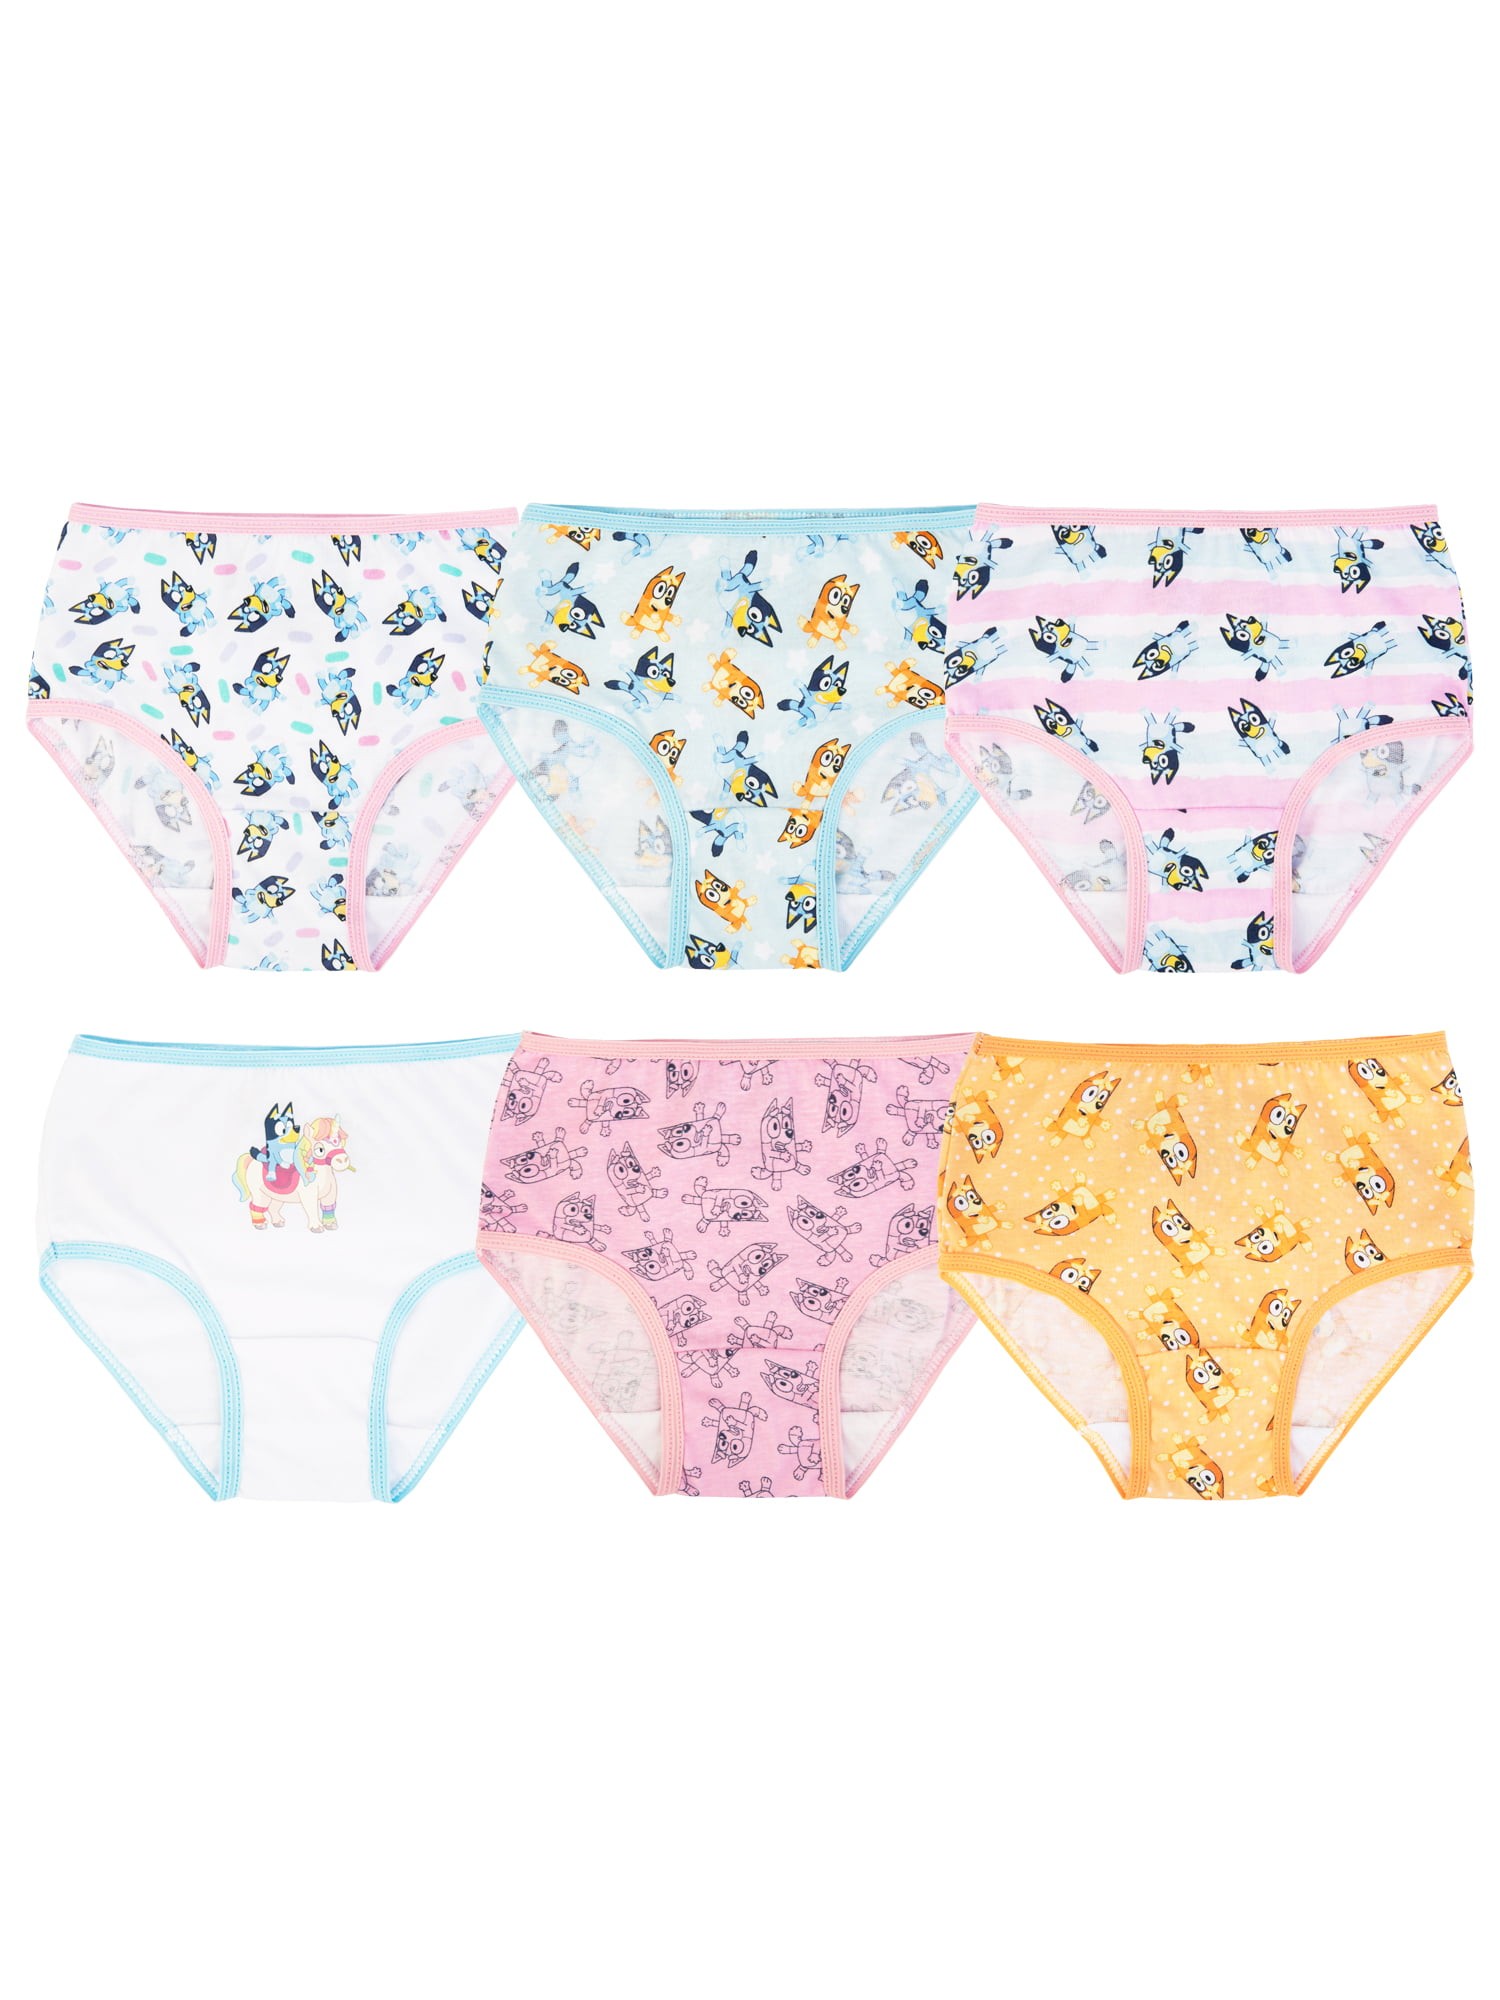 Mejores ofertas e historial de precios de Bluey Toddler Girls Underwear, 6  Pack Sizes 2T-4T en